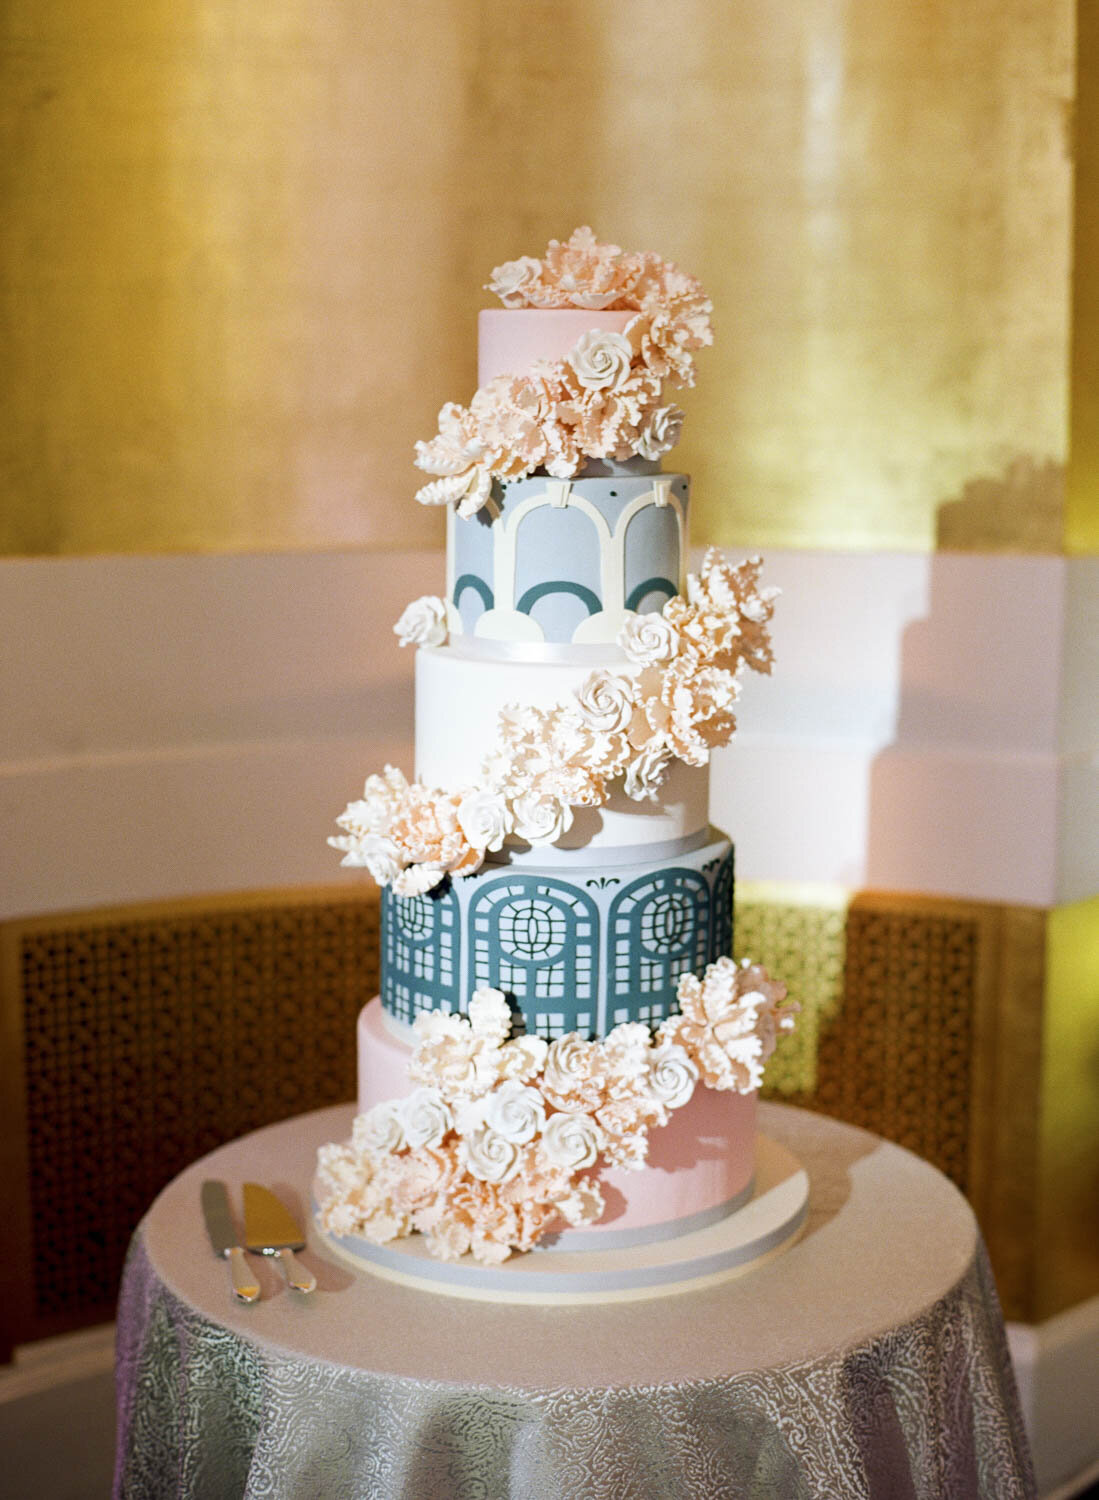 Cakes by Jason at sagamore pendry hotel Baltimore Wedding